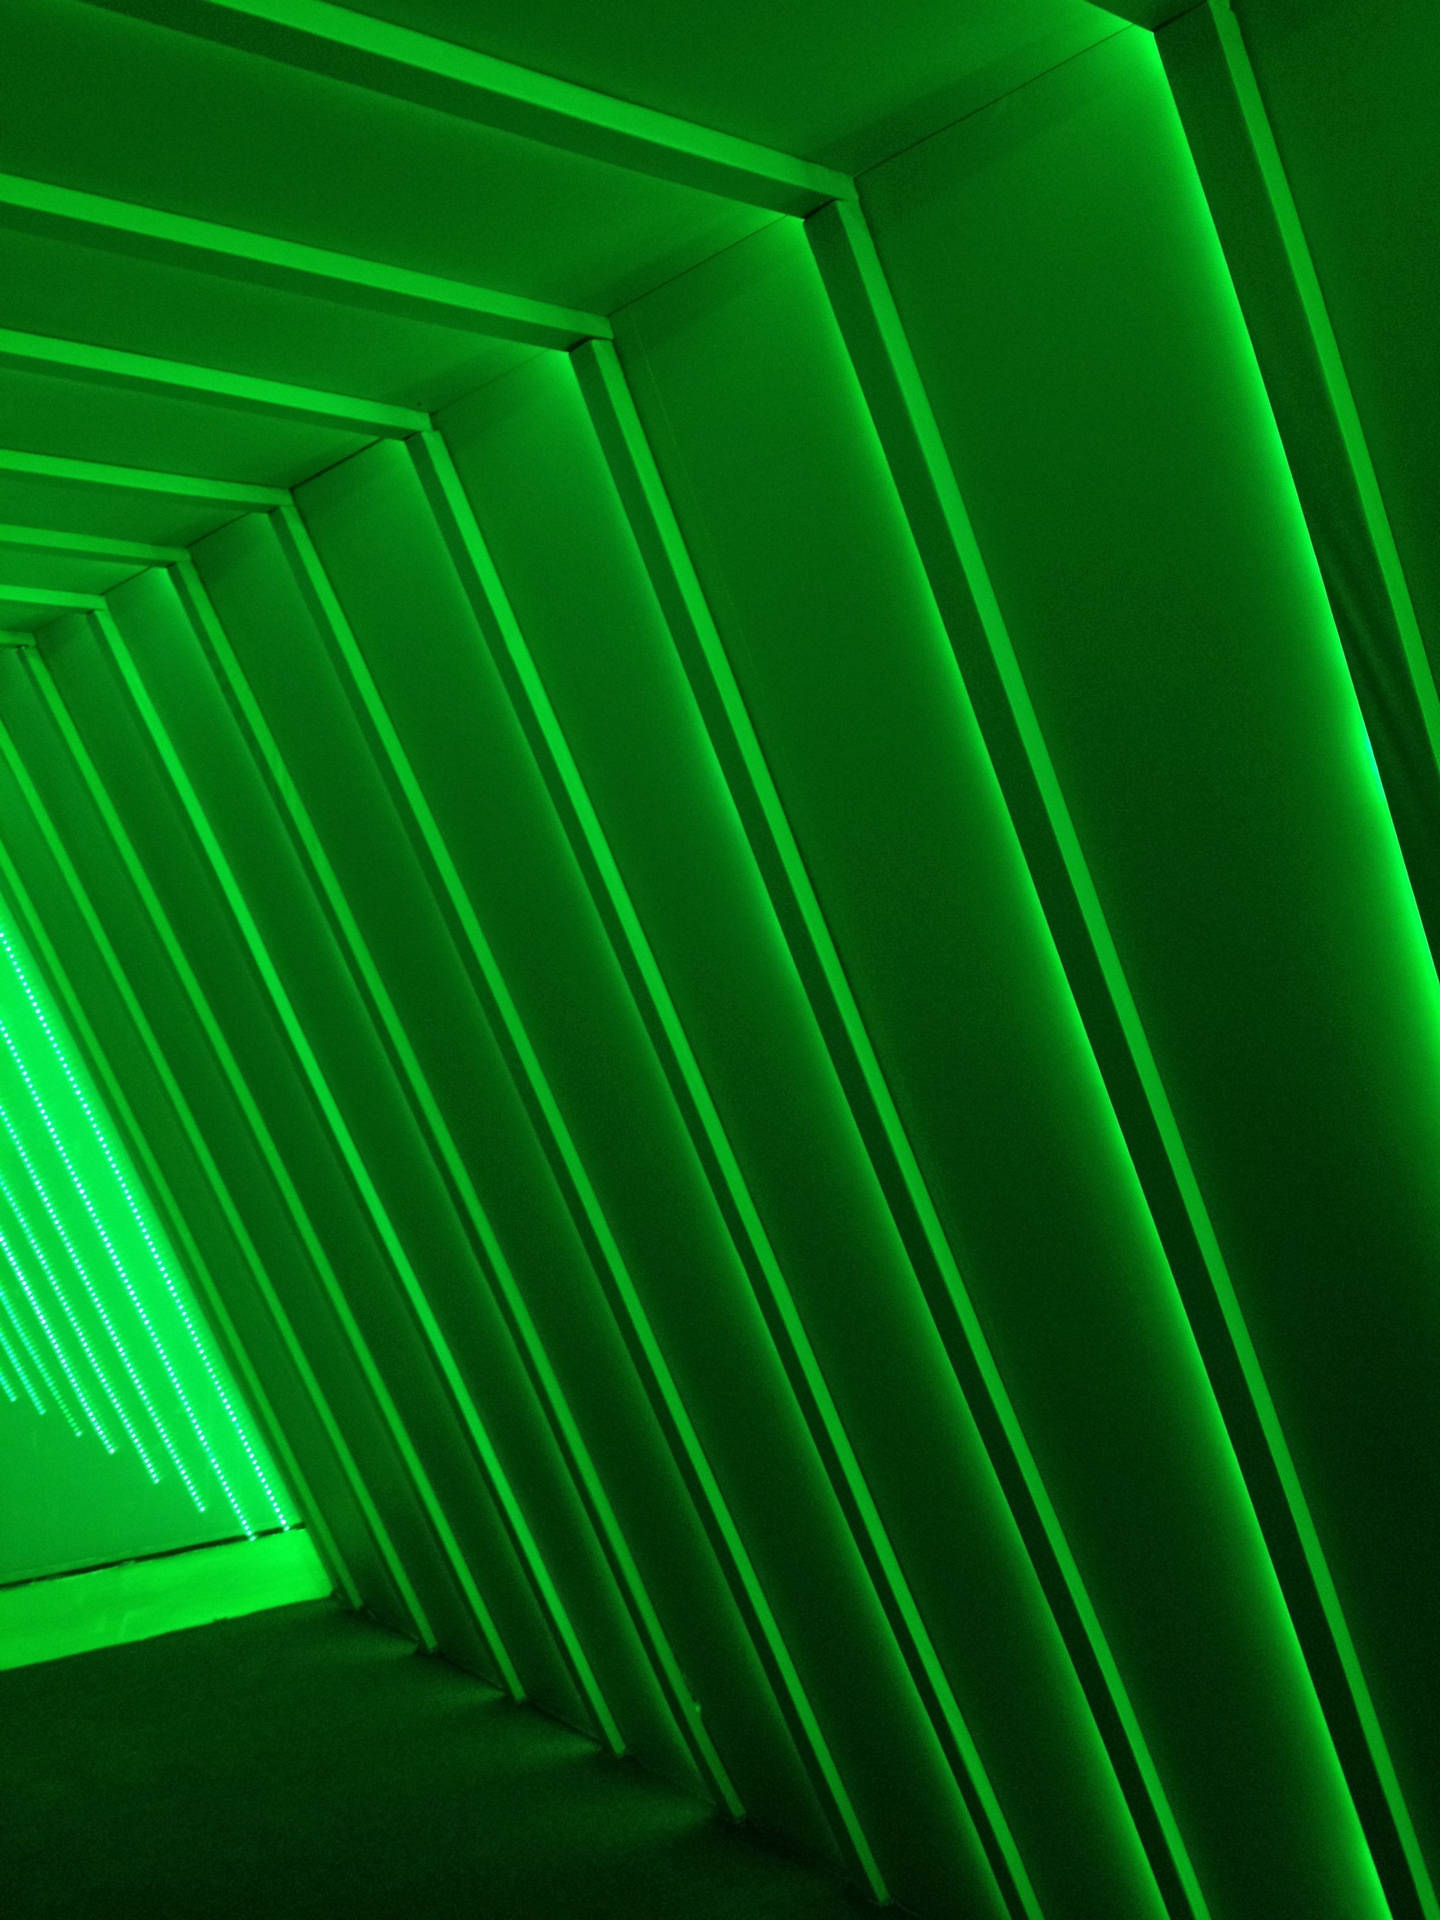 Neon Green Aesthetic Tumblr Wall Lights Wallpaper